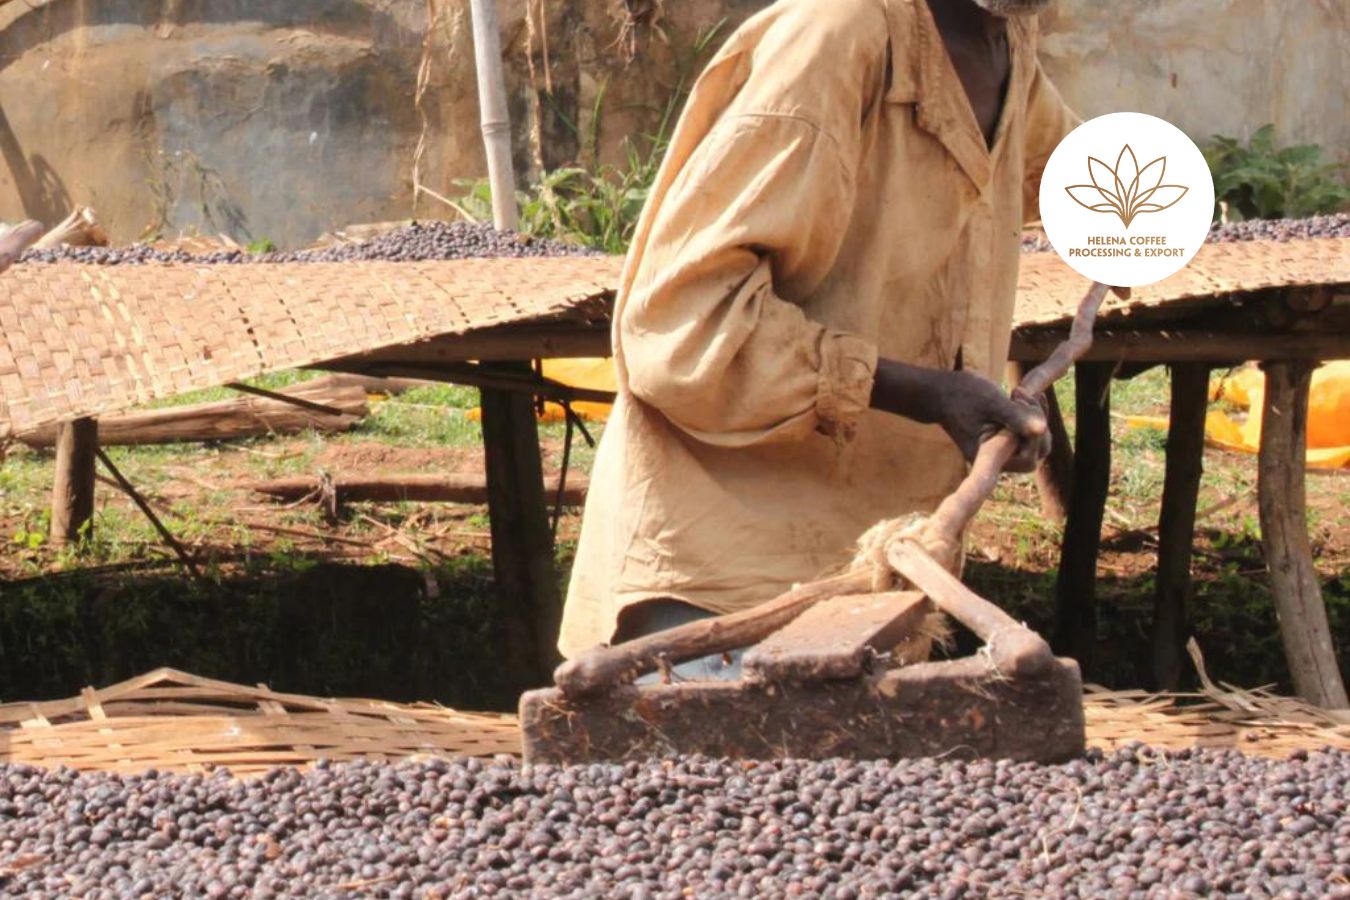 Jamaica Coffee Industry